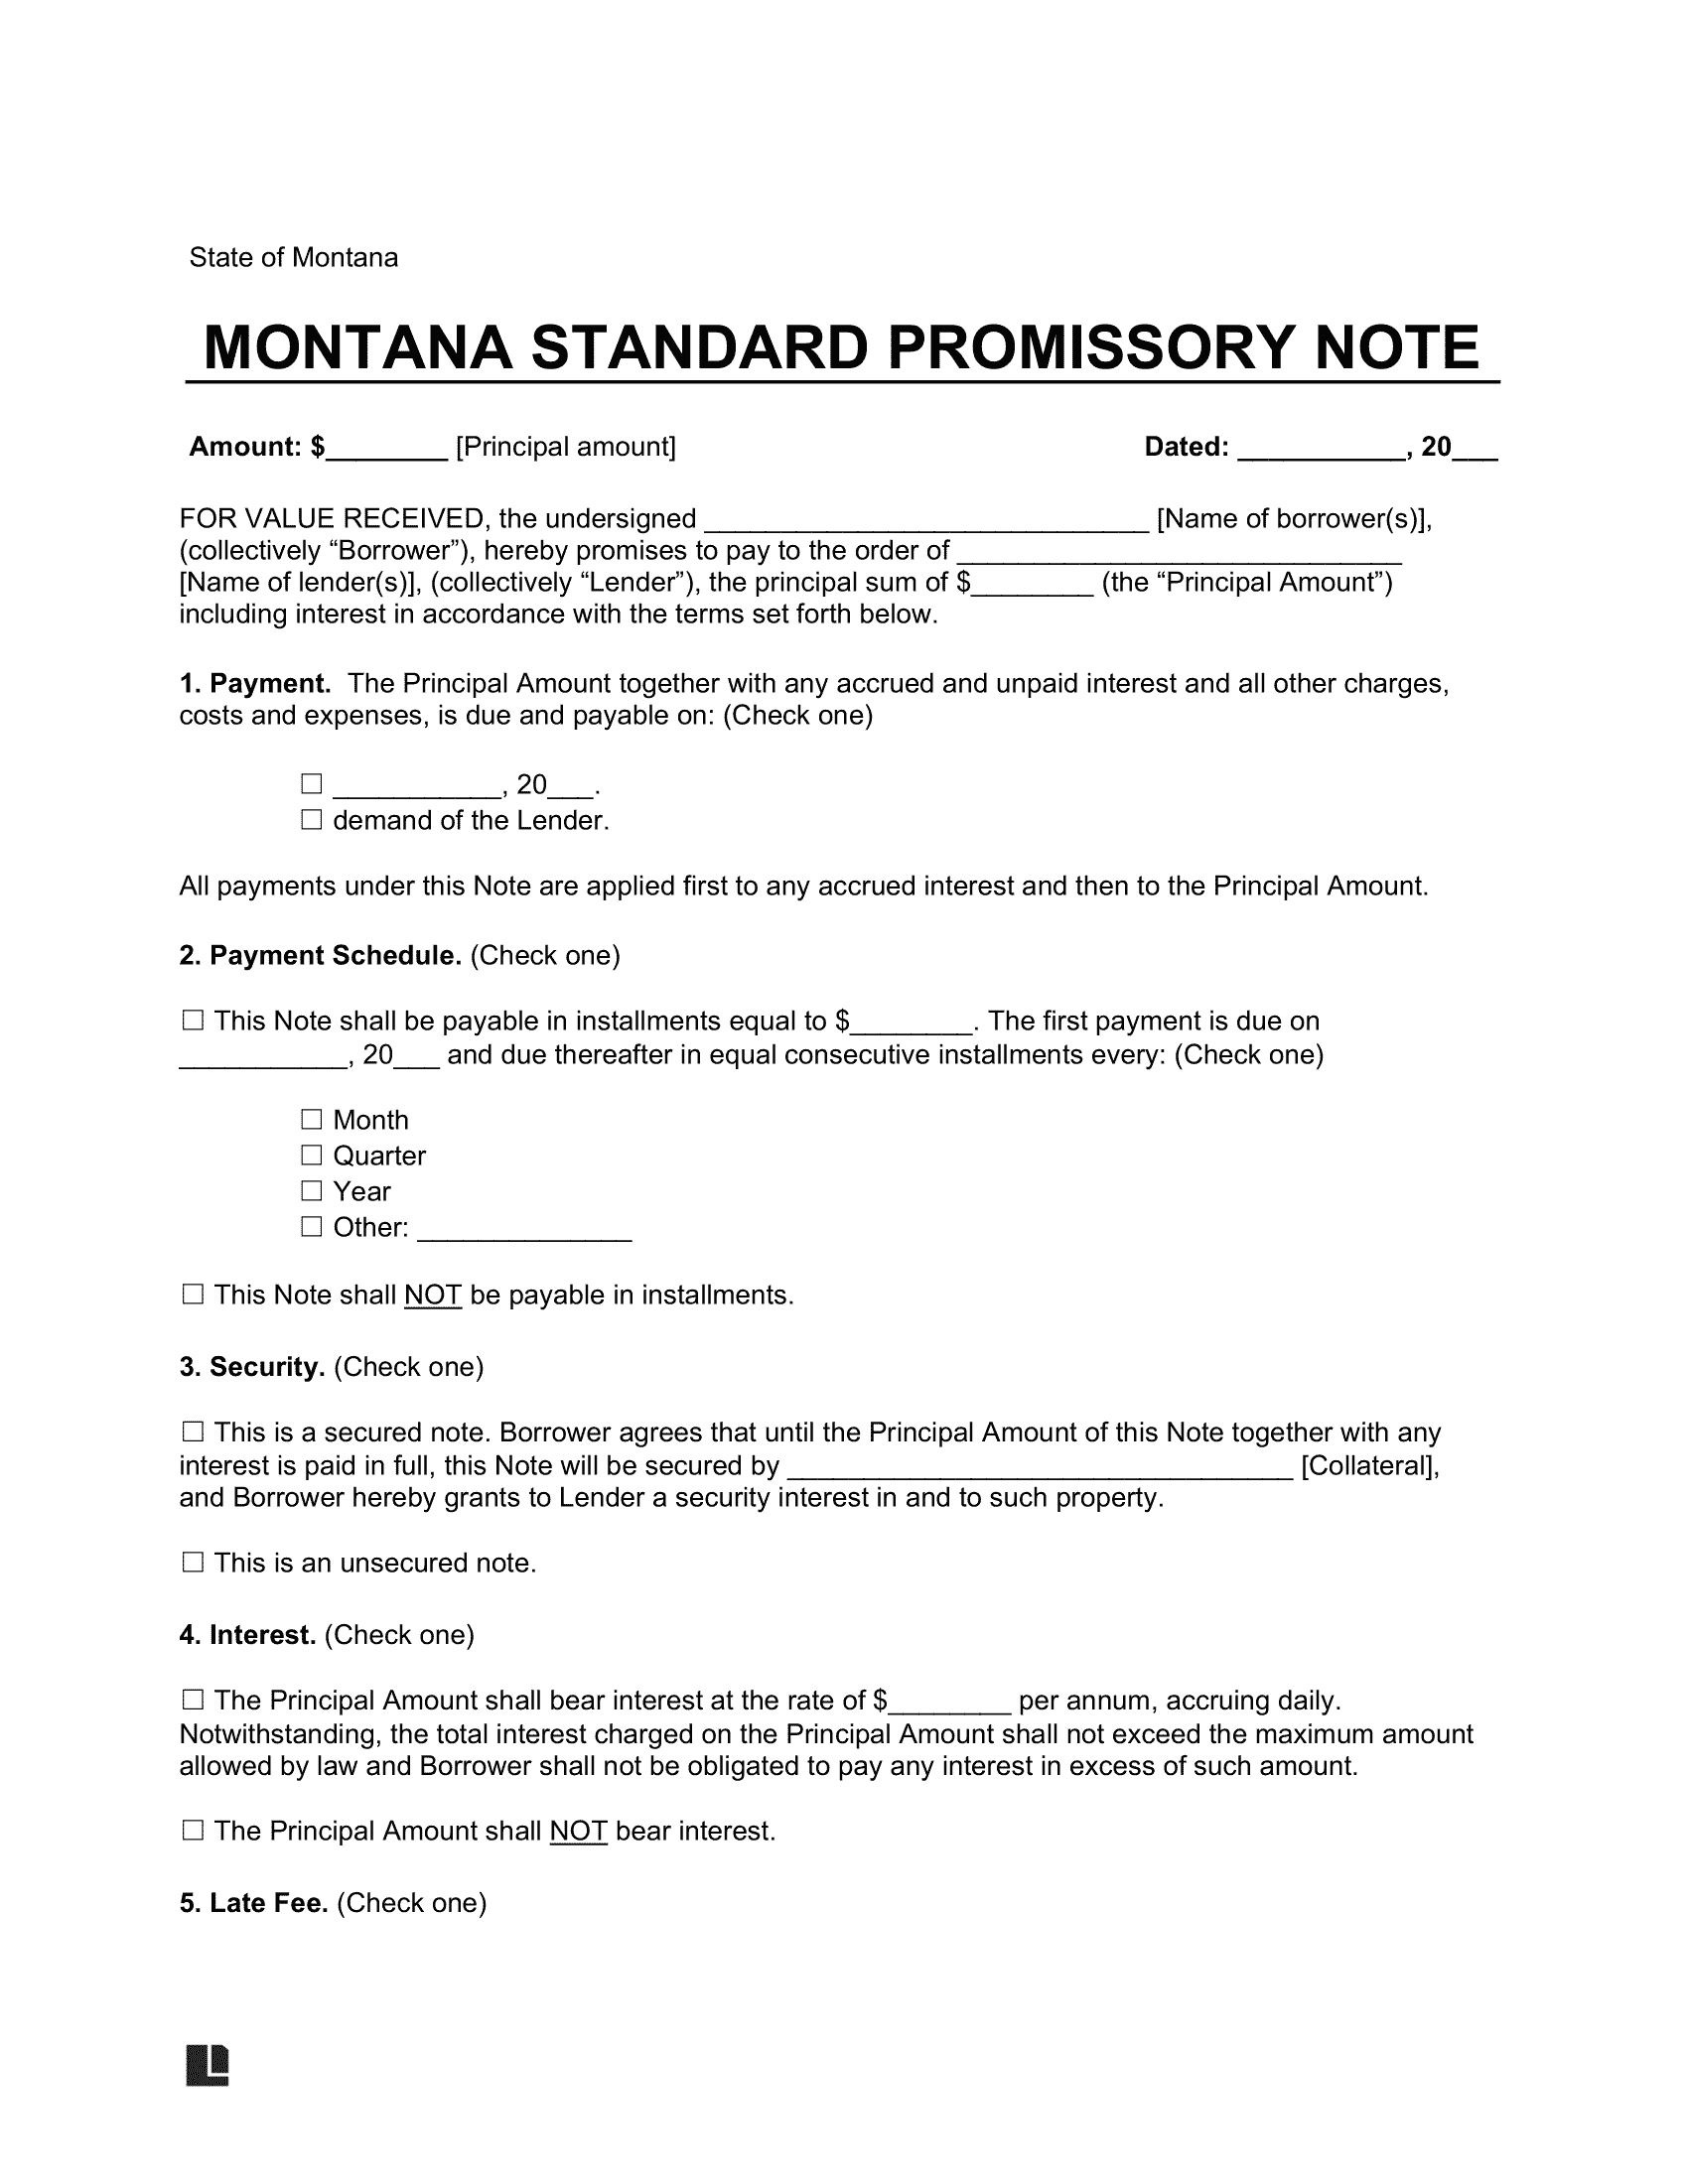 Montana Standard Promissory Note Template